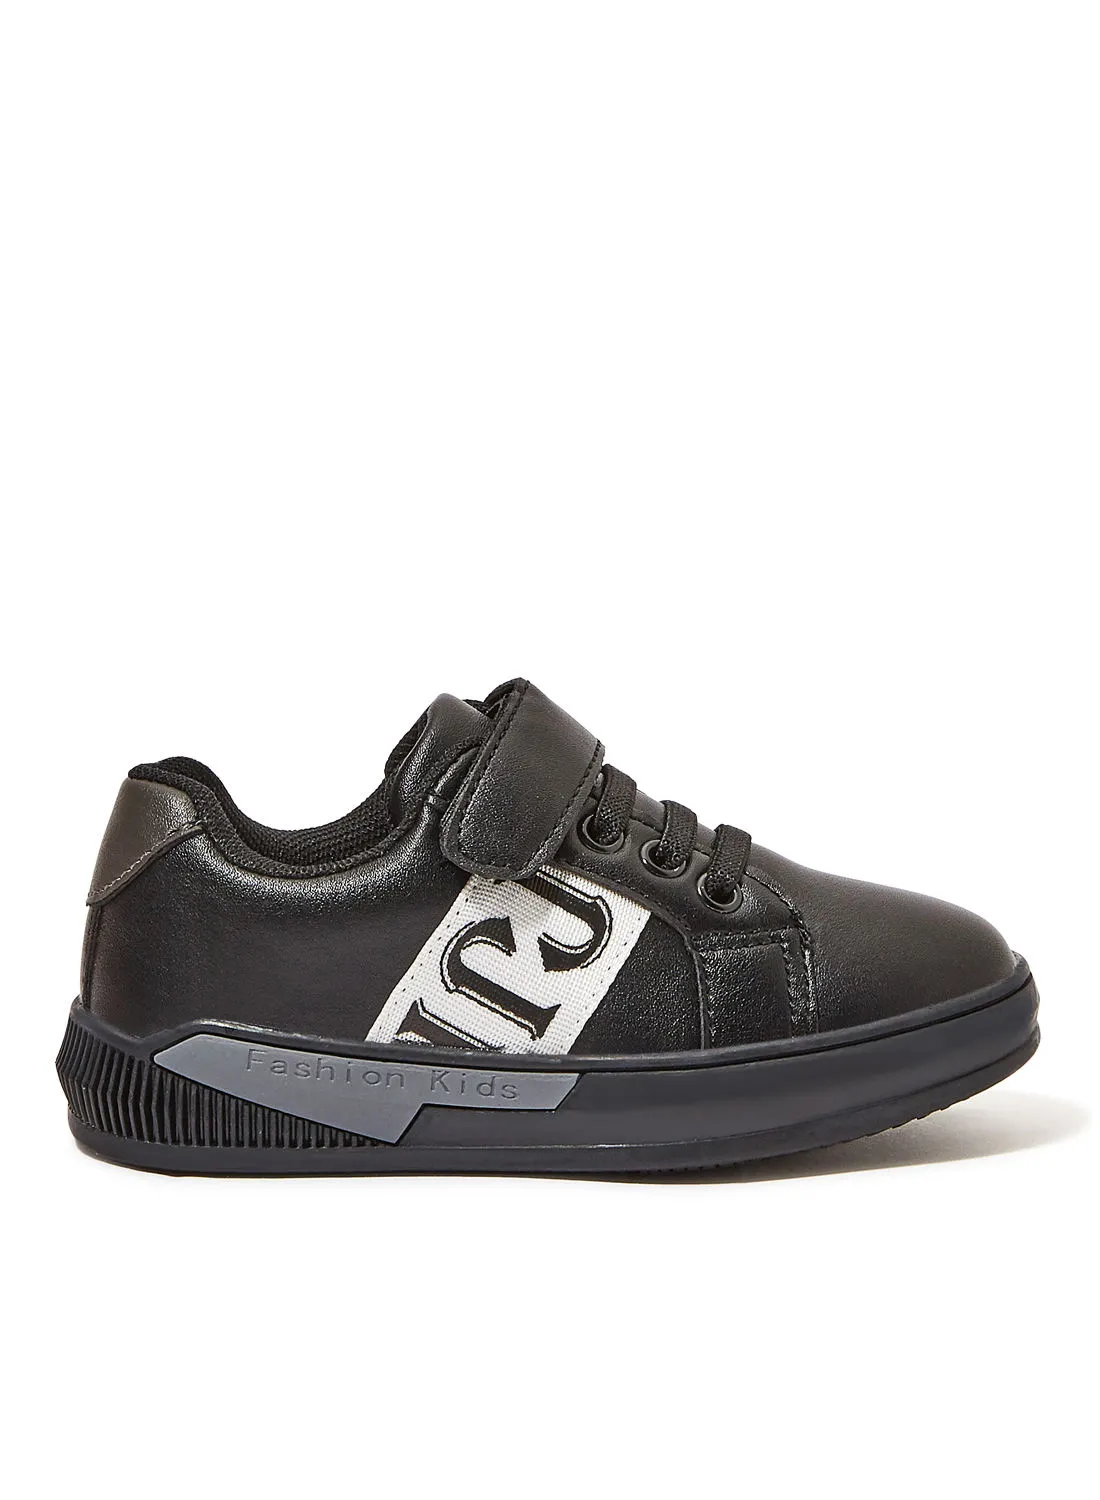 Jurado Branding Initial Sneakers Black